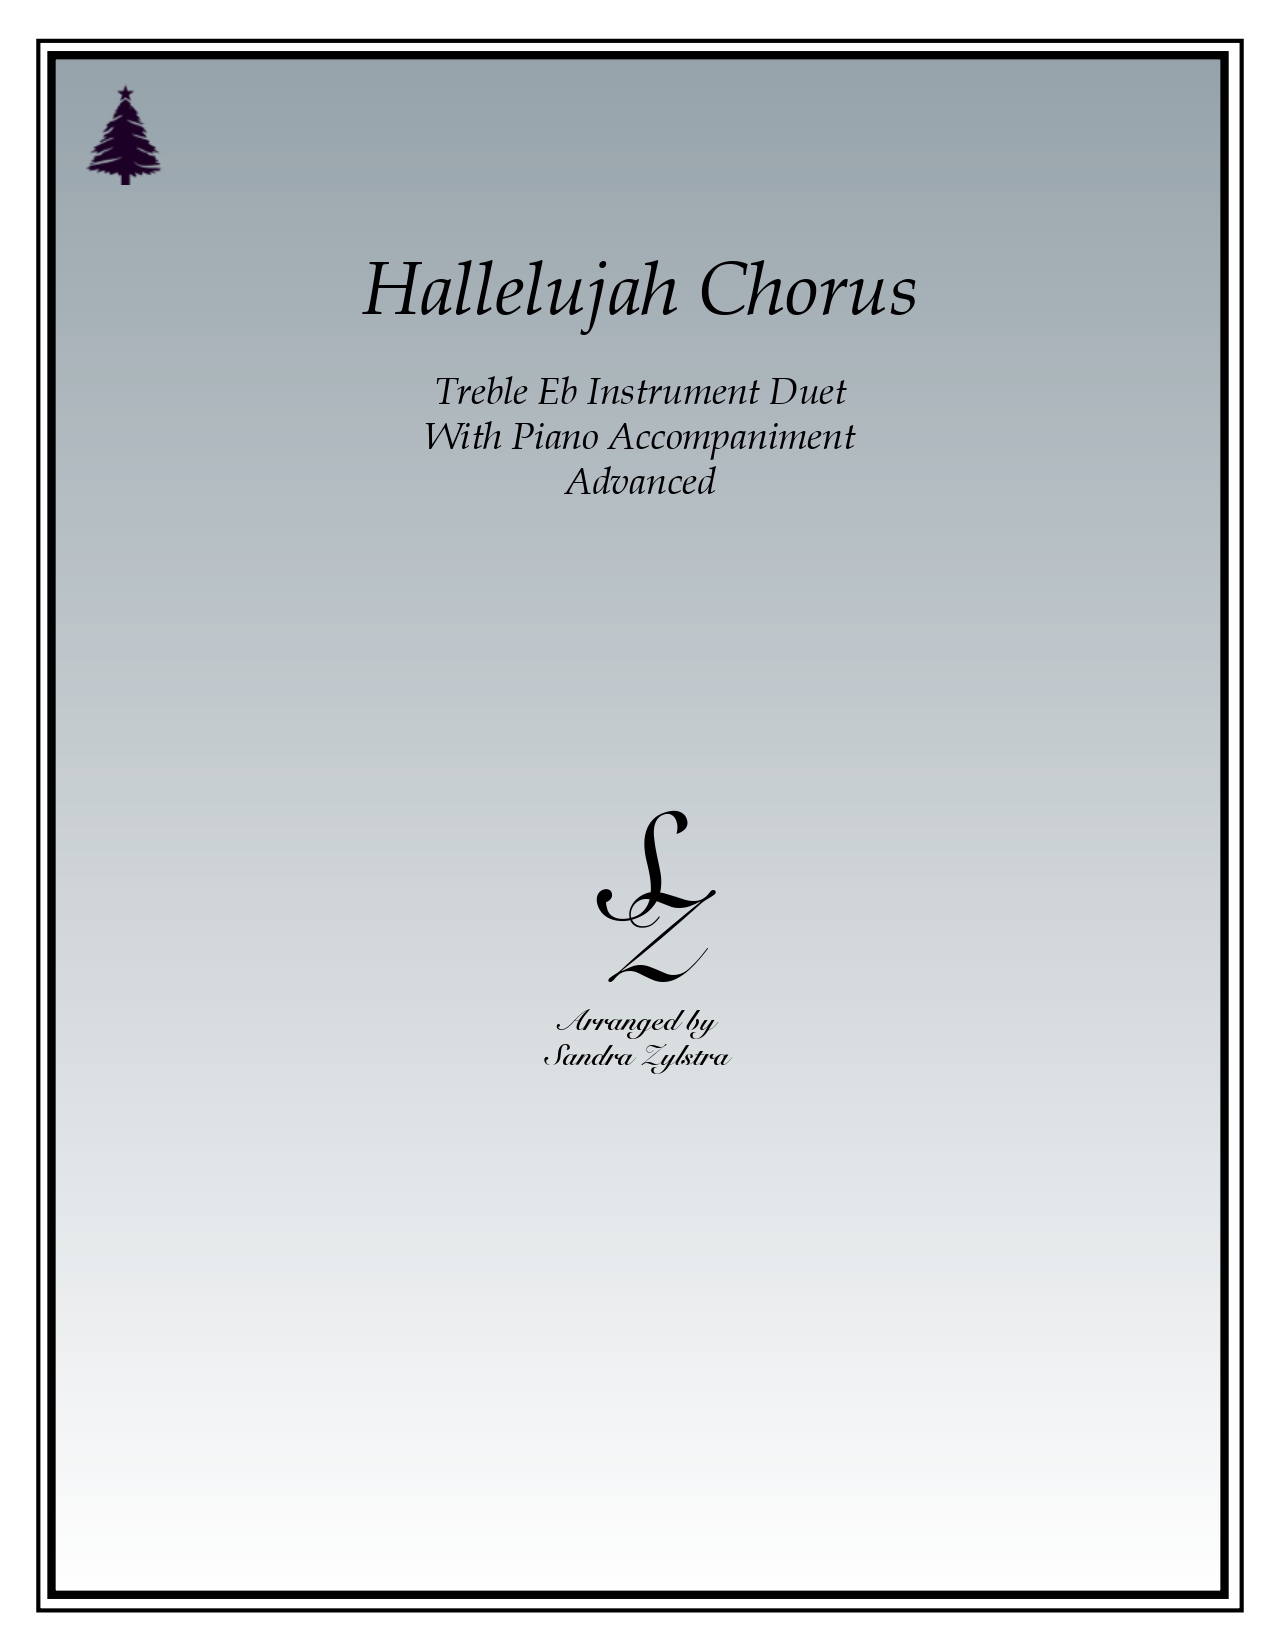 Hallelujah Chorus Eb instrument duet parts cover page 00011